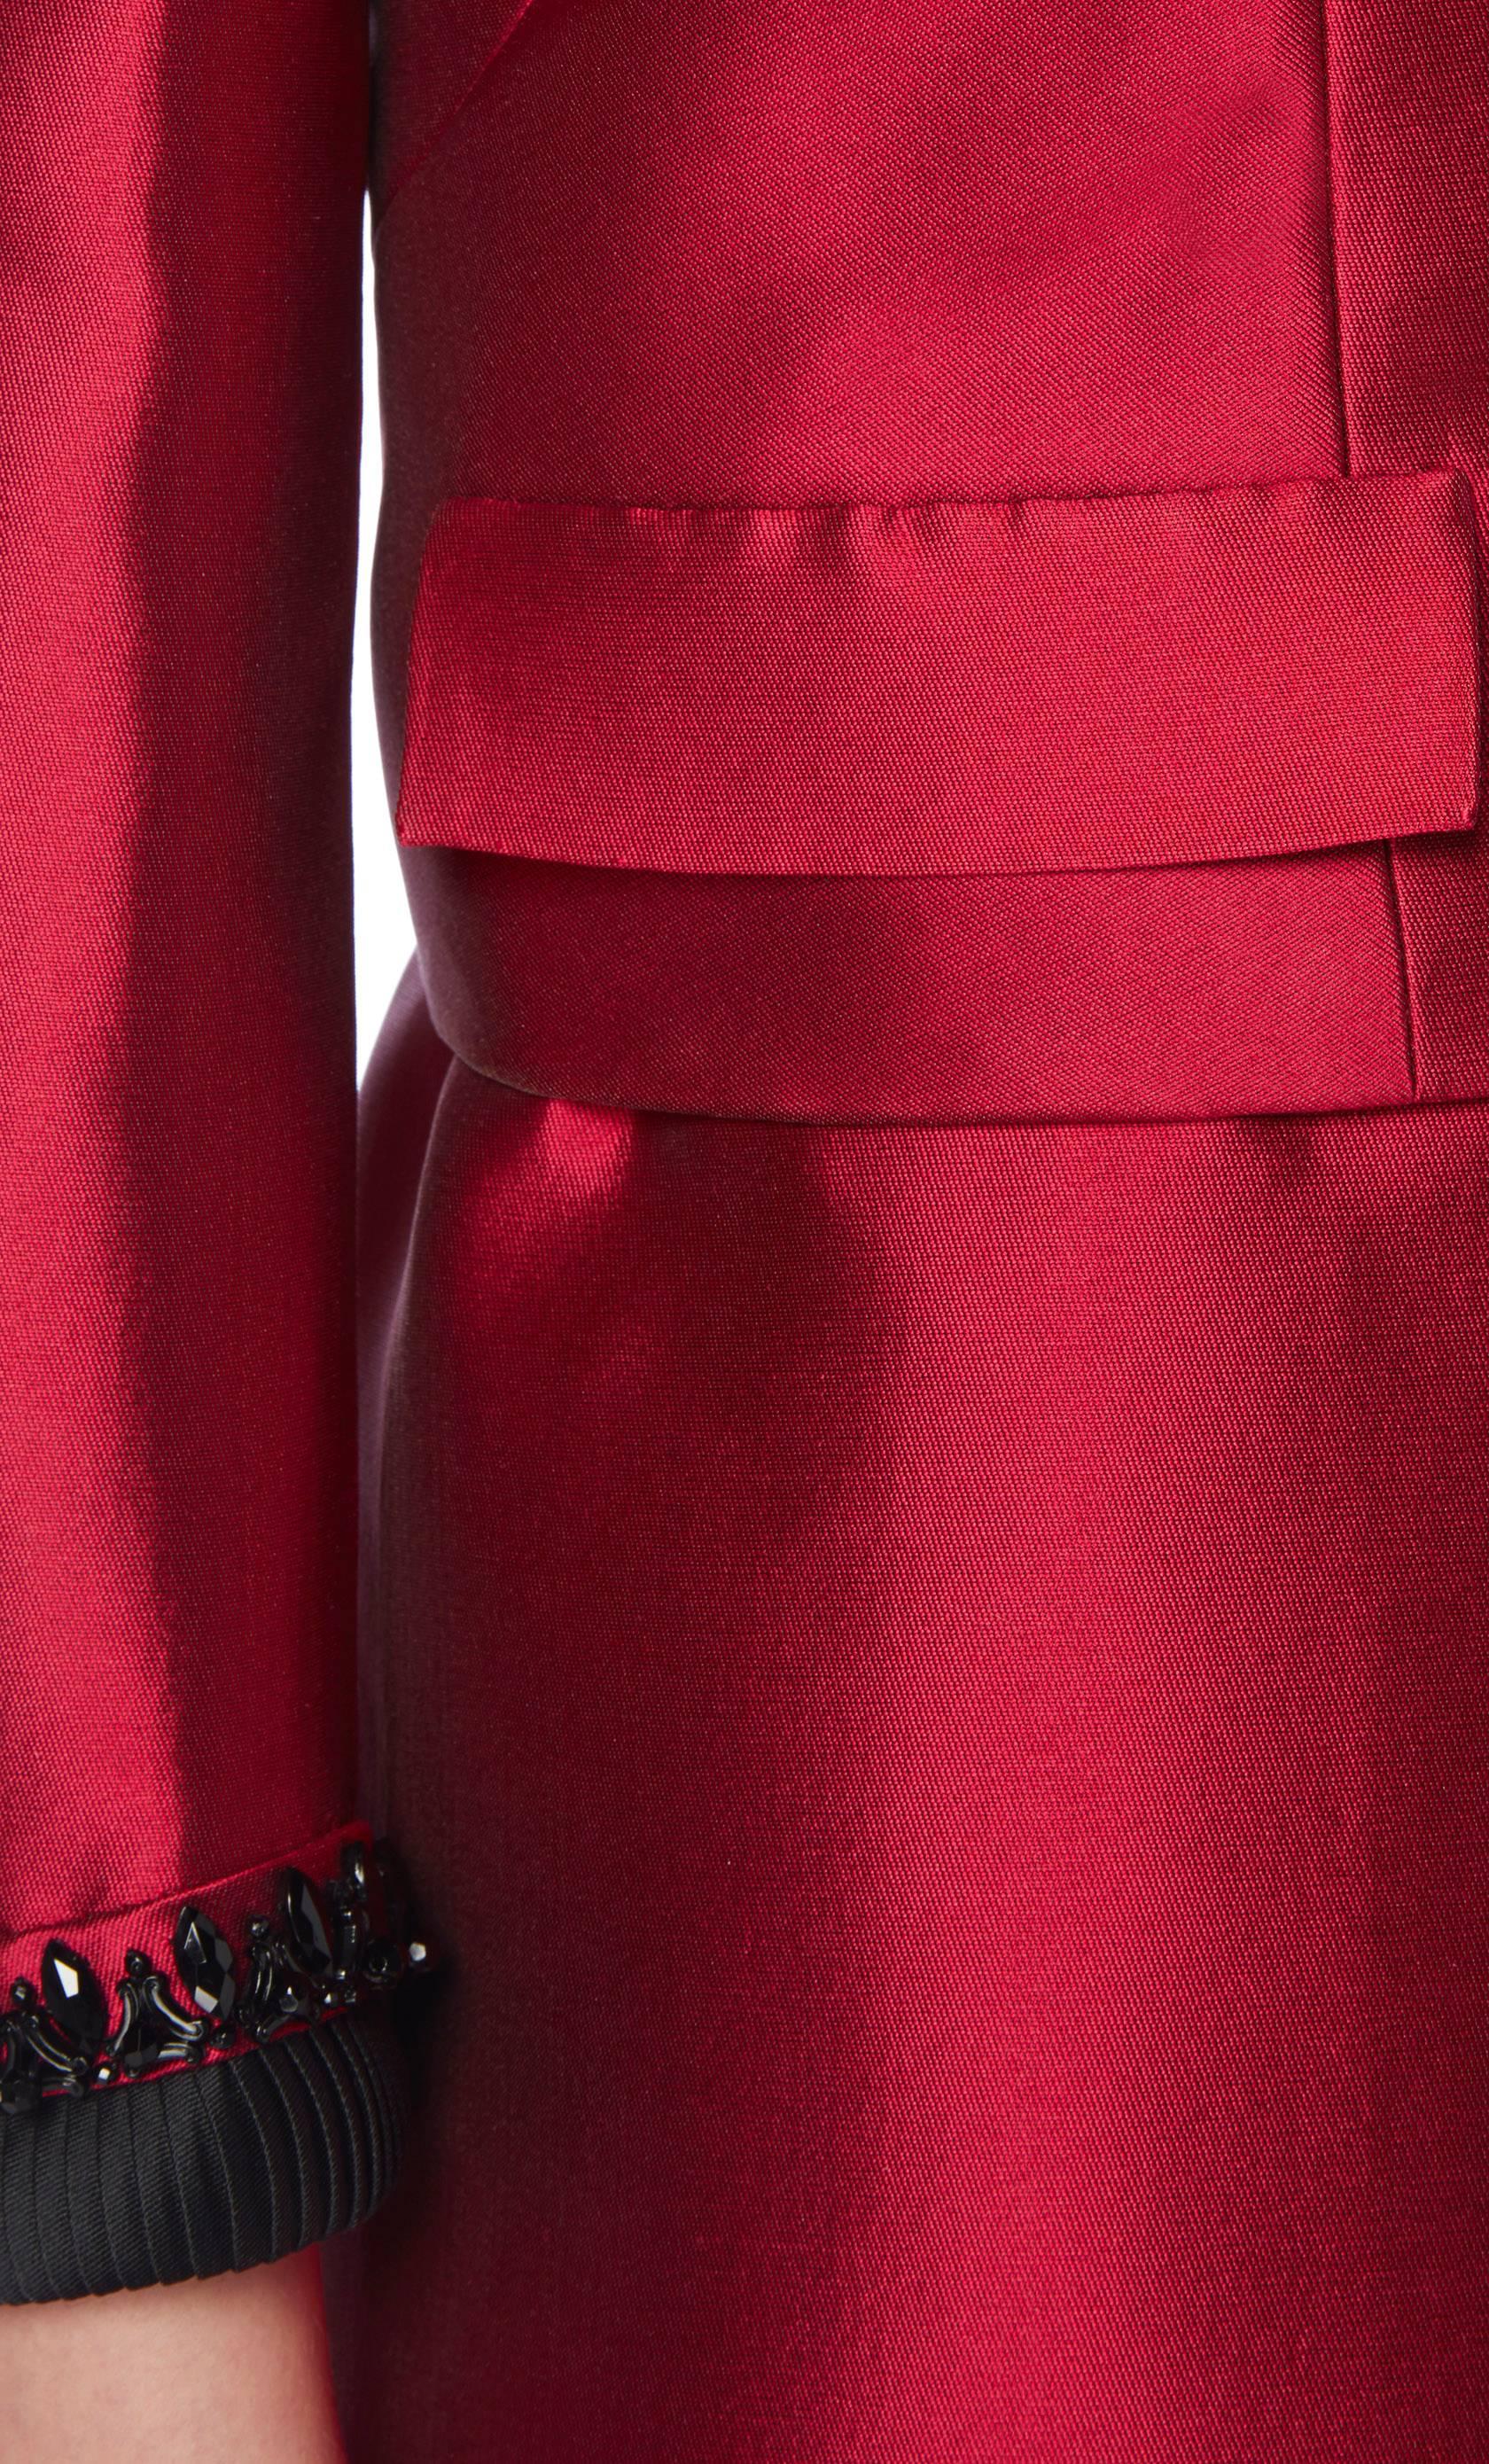 Pierre Balmain haute couture red dress suit, circa 1966 For Sale 1